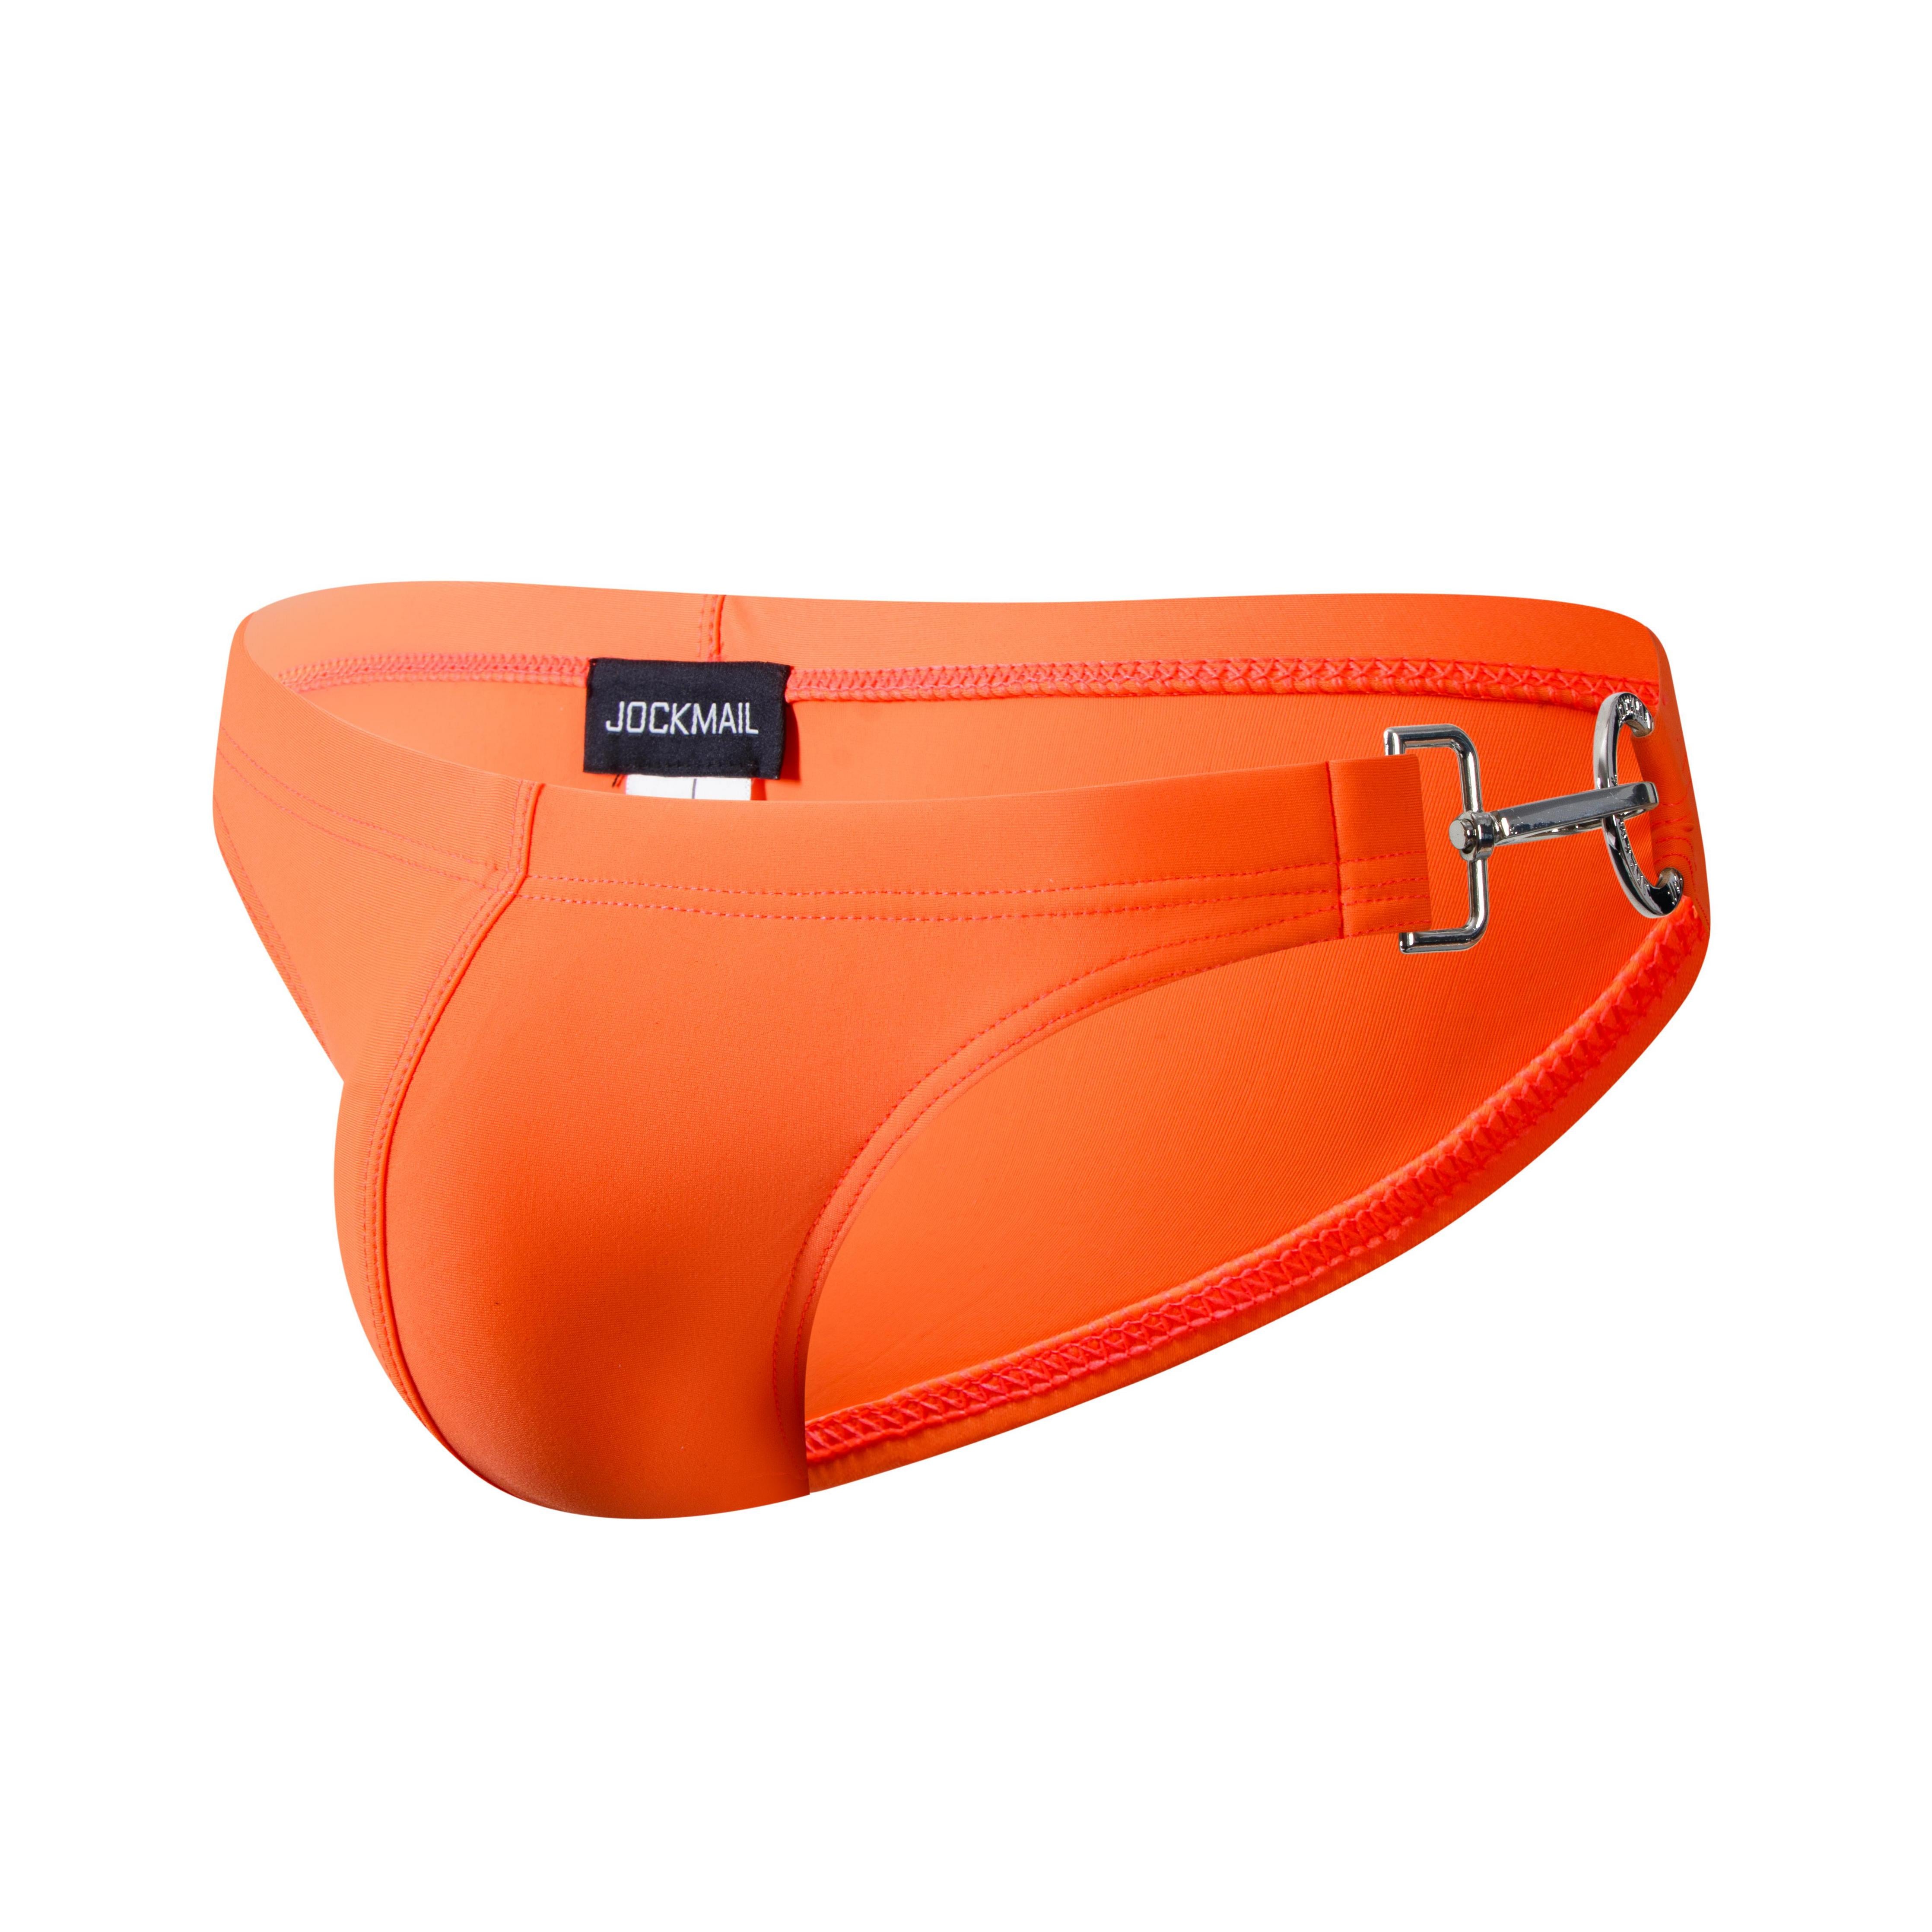 Orange Camo Brief+ O-Ring Underwear